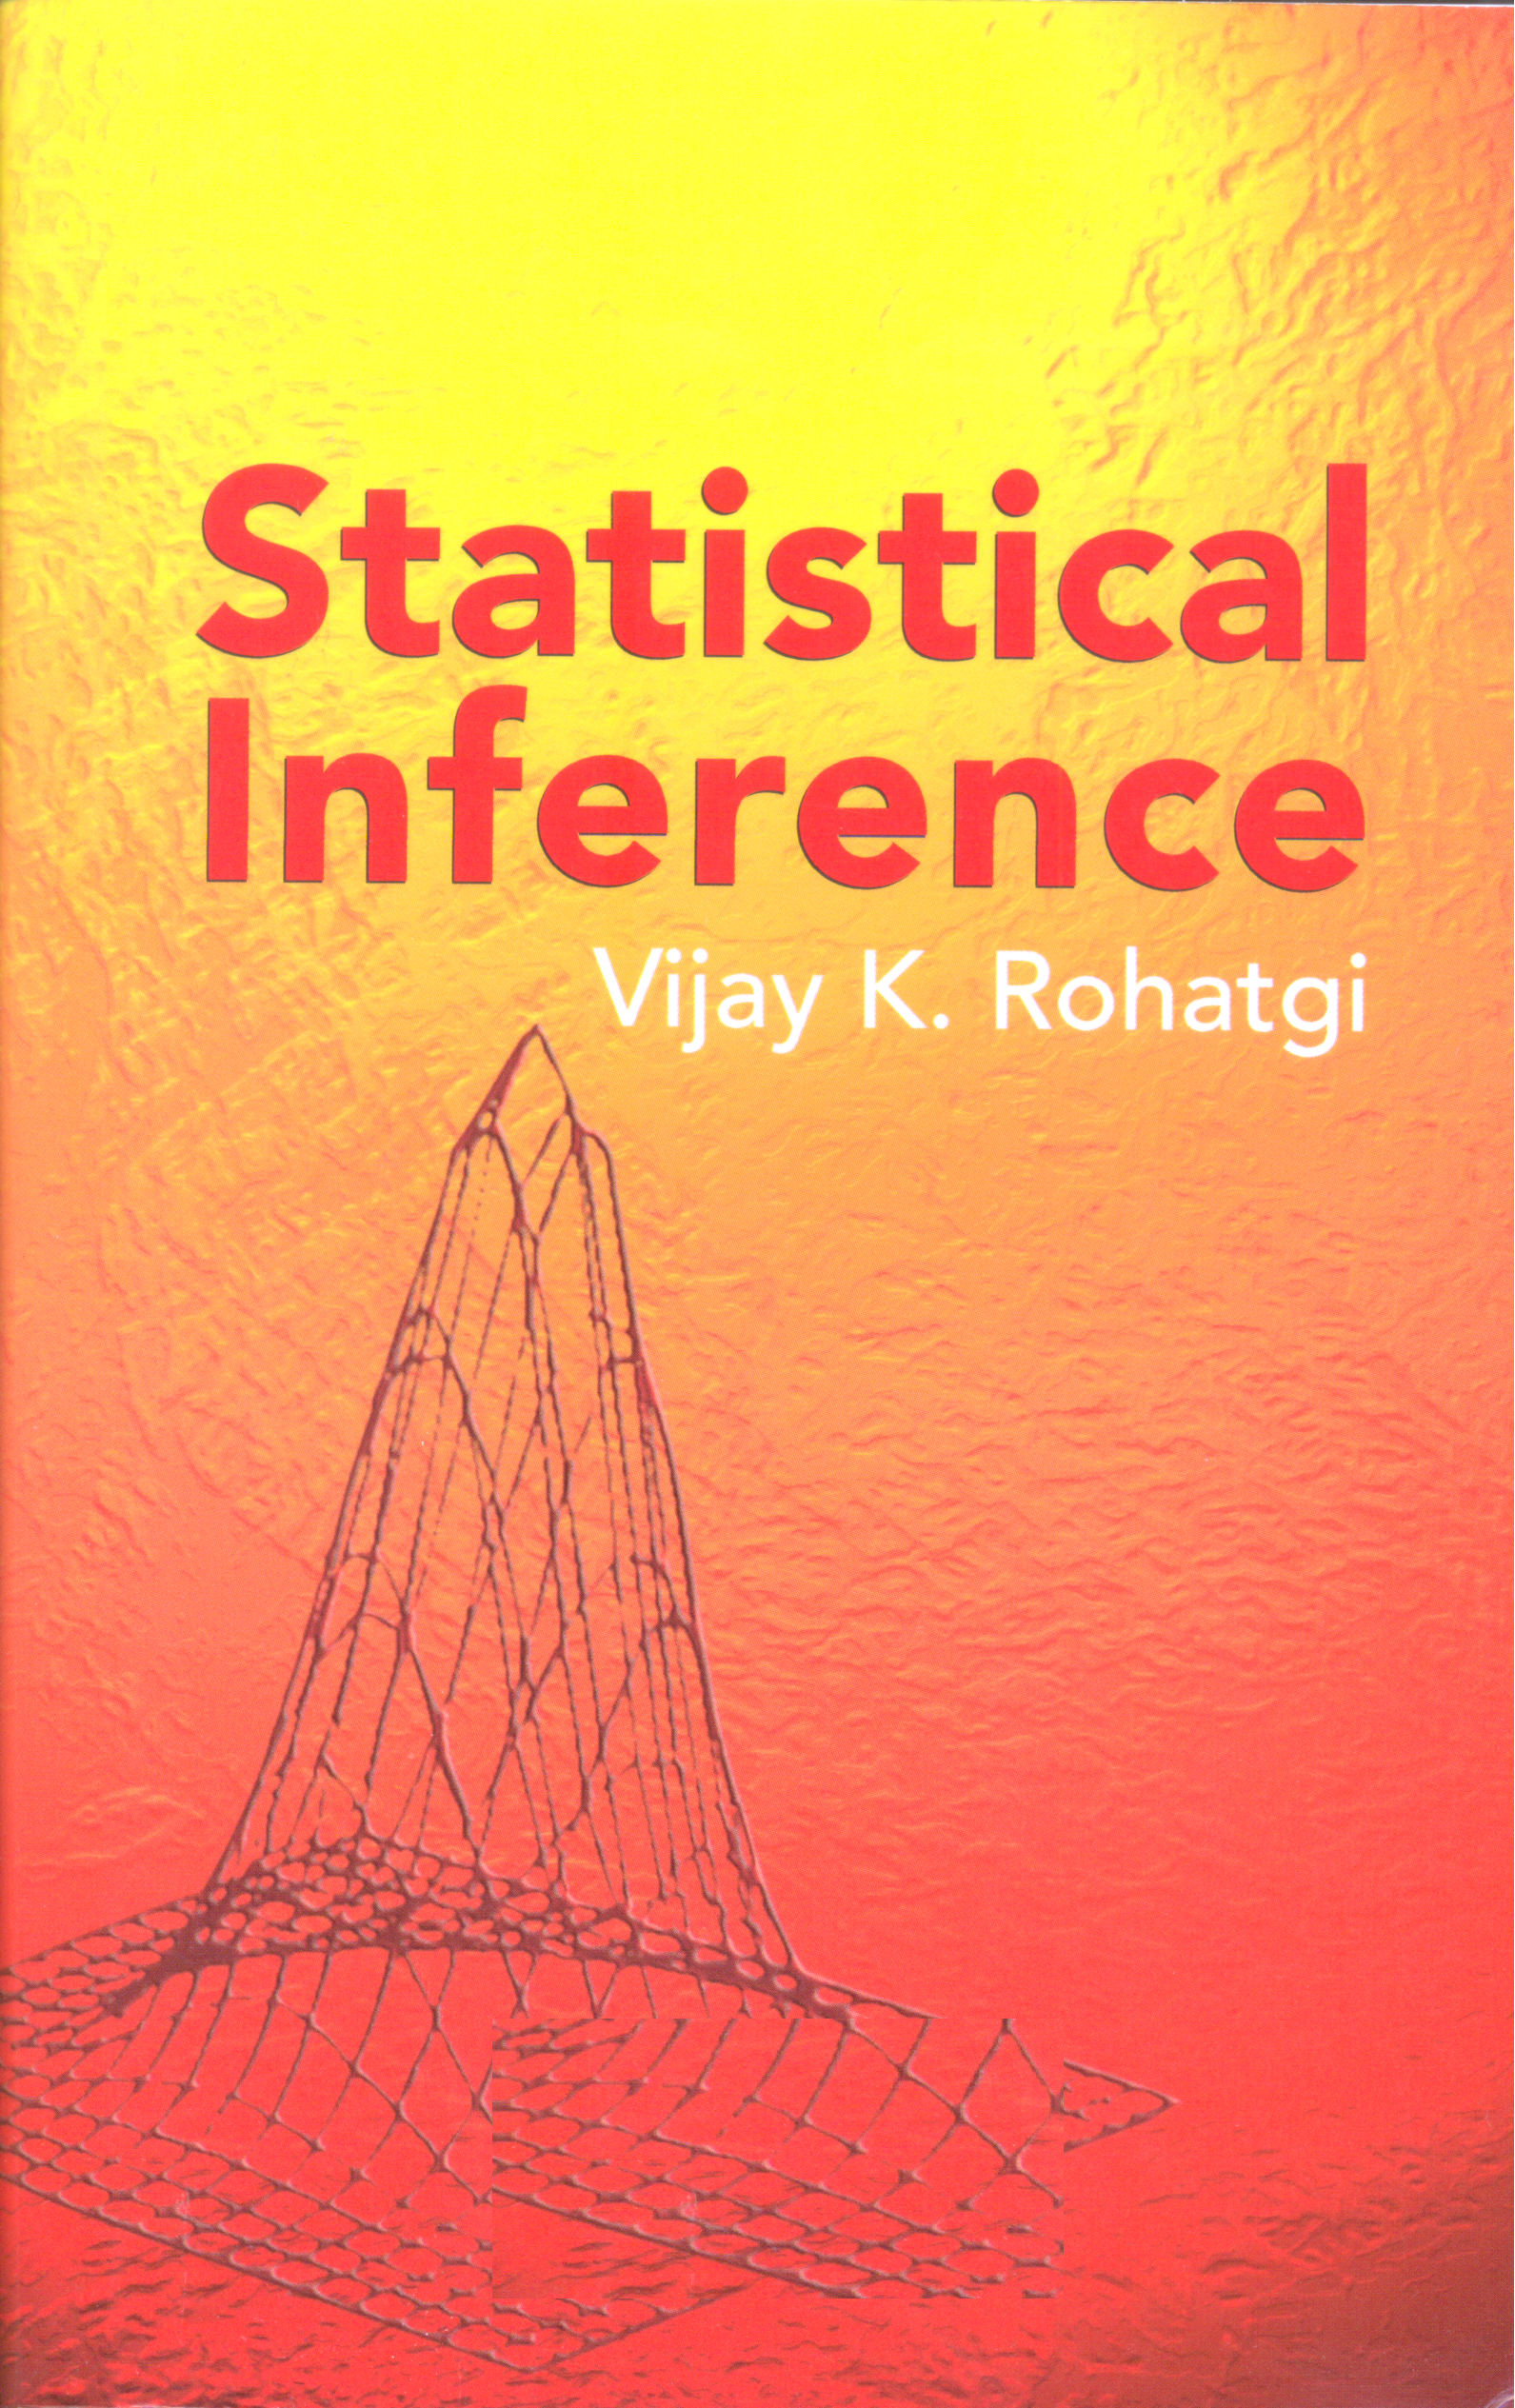 Statistical inference / Vijay K. Rohatgi